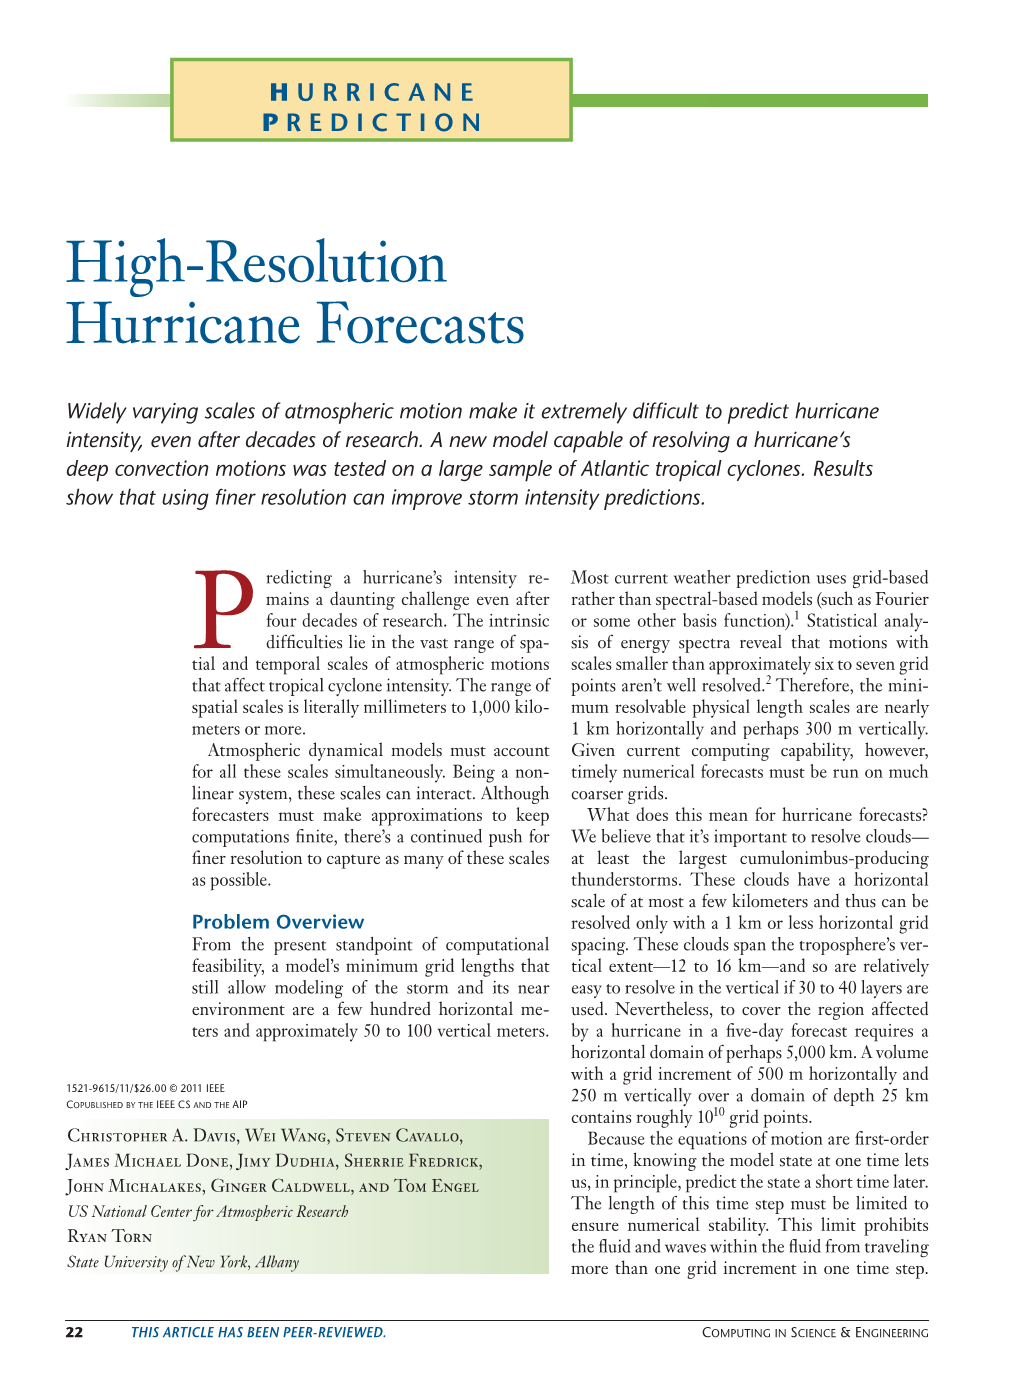 High-Resolution Hurricane Forecasts